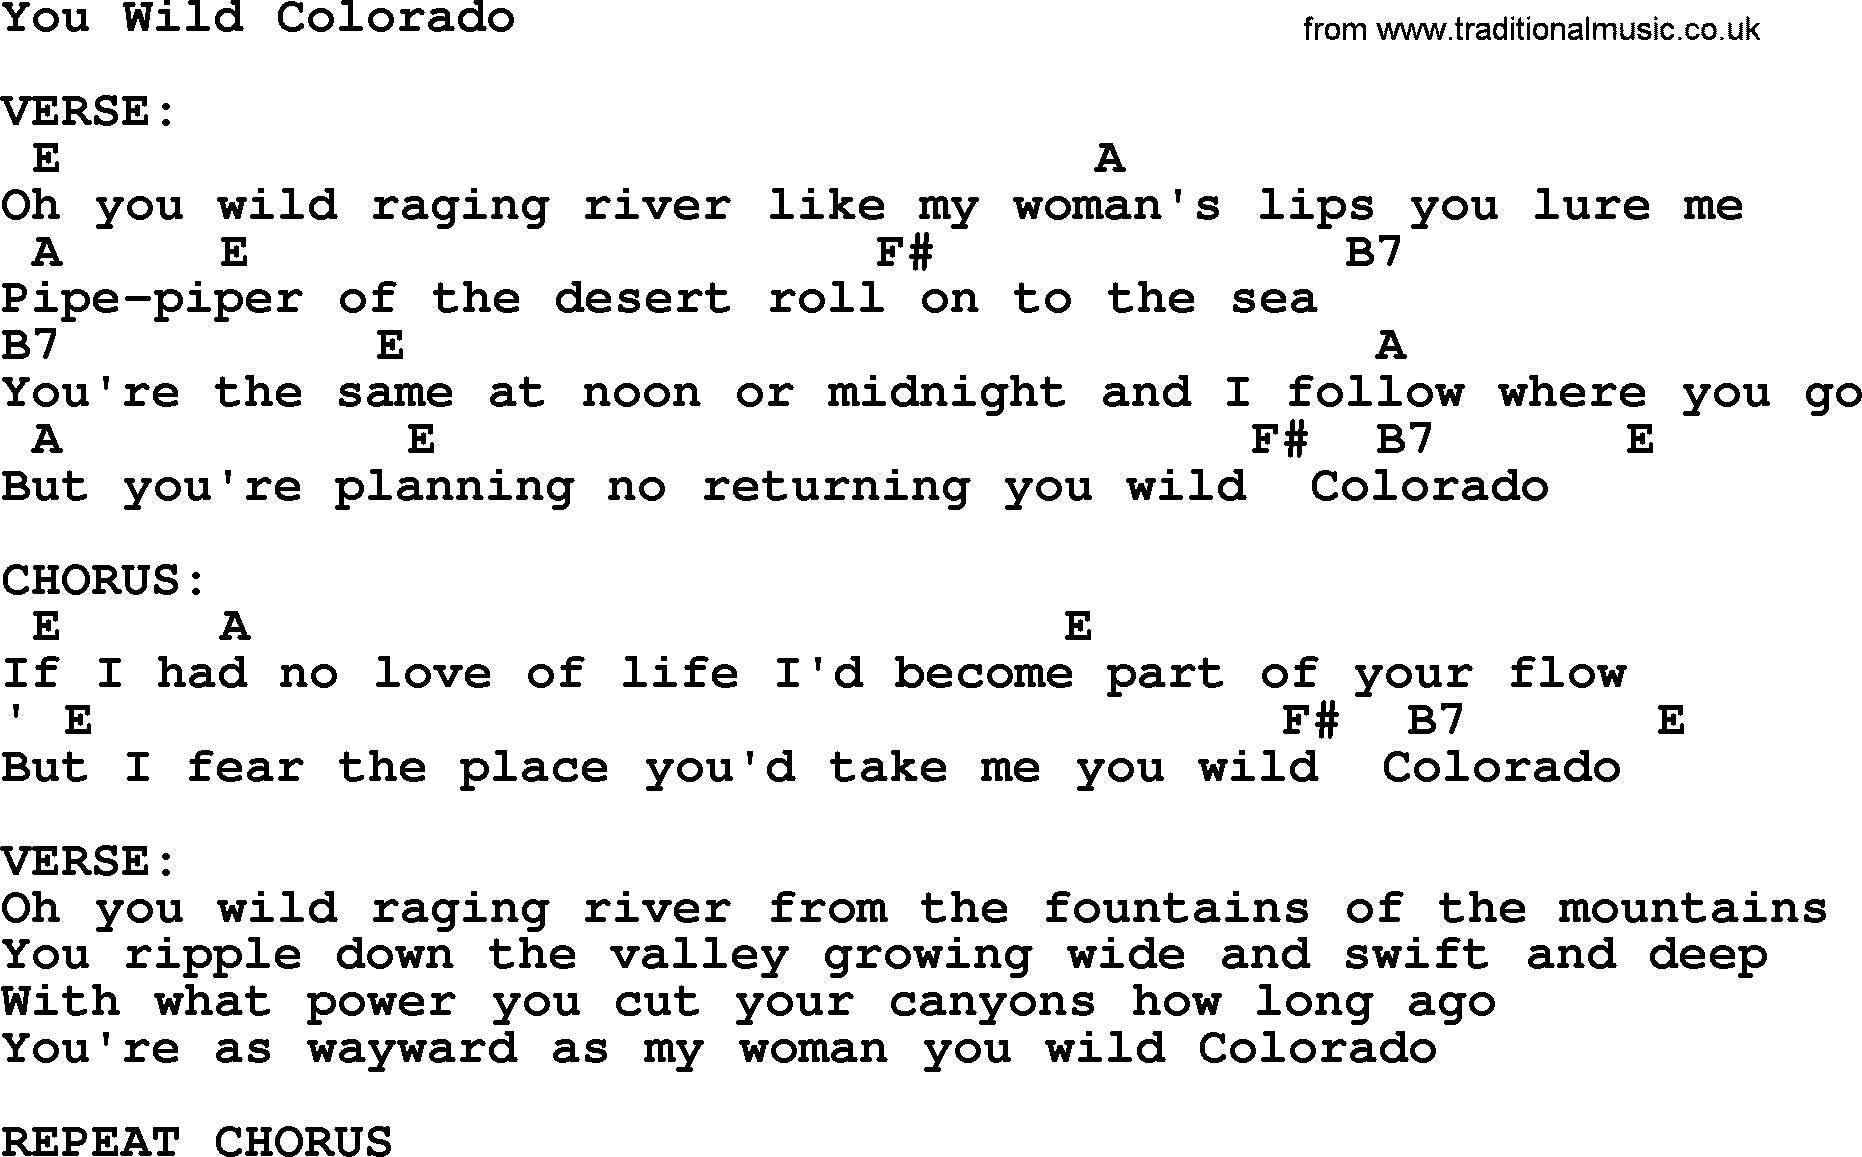 Johnny Cash song You Wild Colorado, lyrics and chords